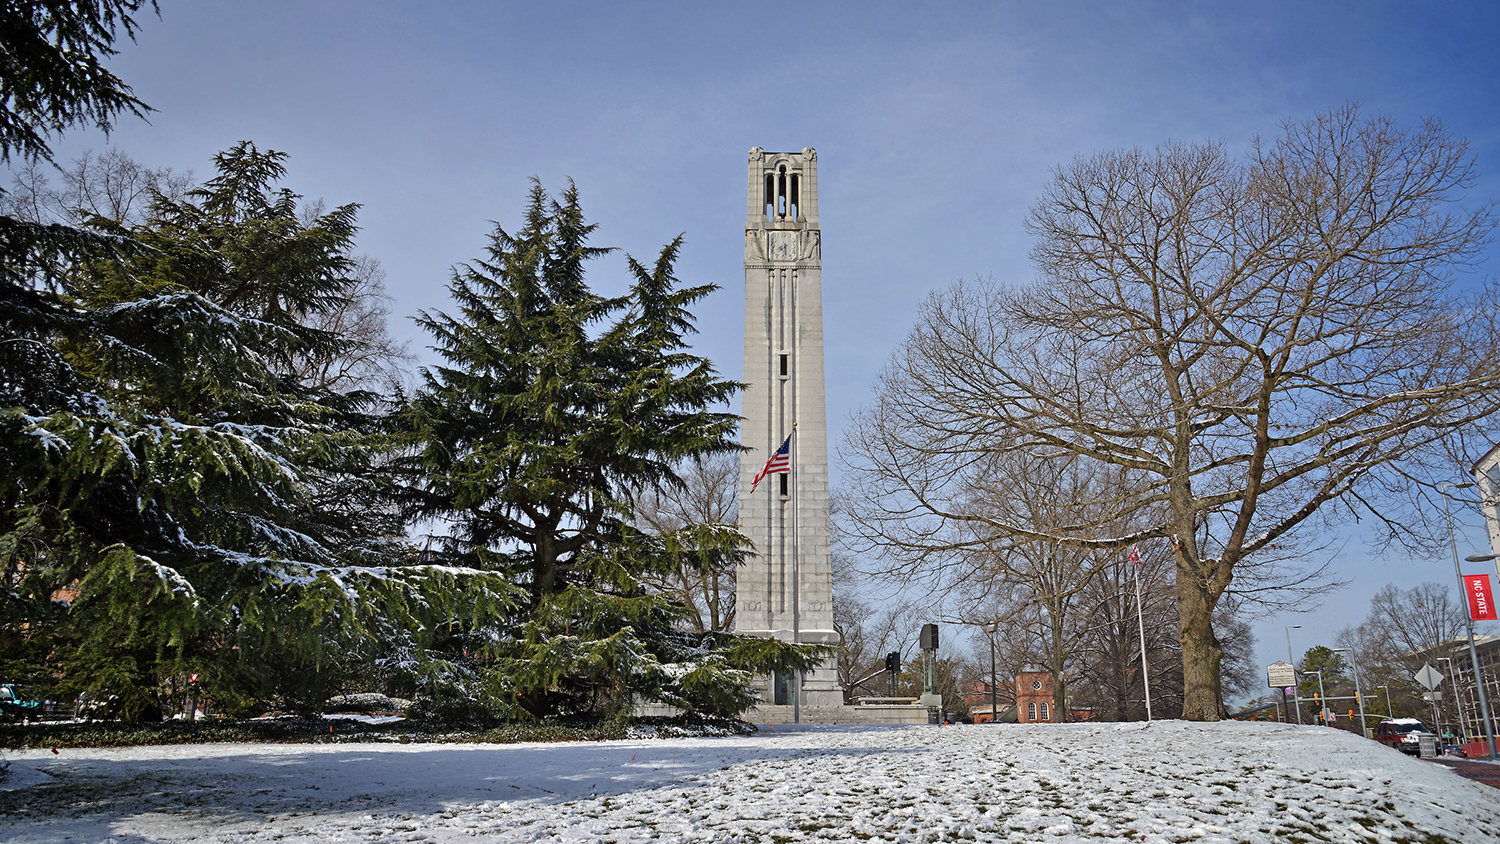 Belltower on a snowy winter's day.